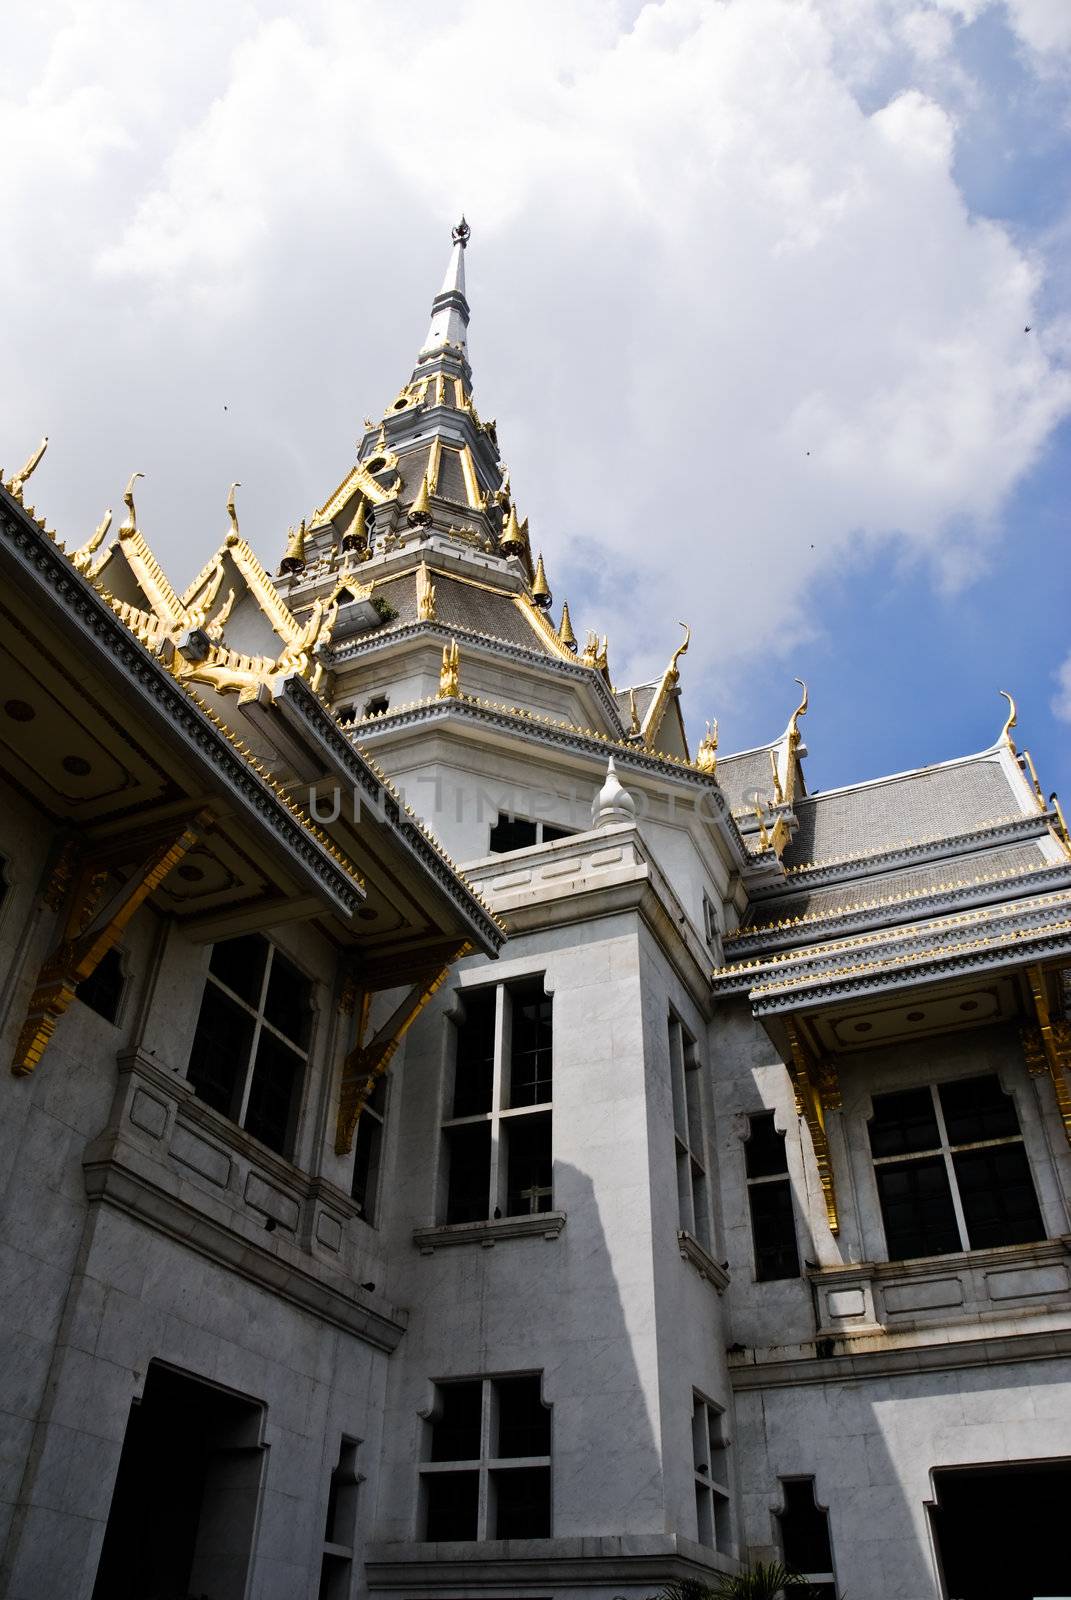 Temple sothon Worawihan Chachoengsao in Thailand